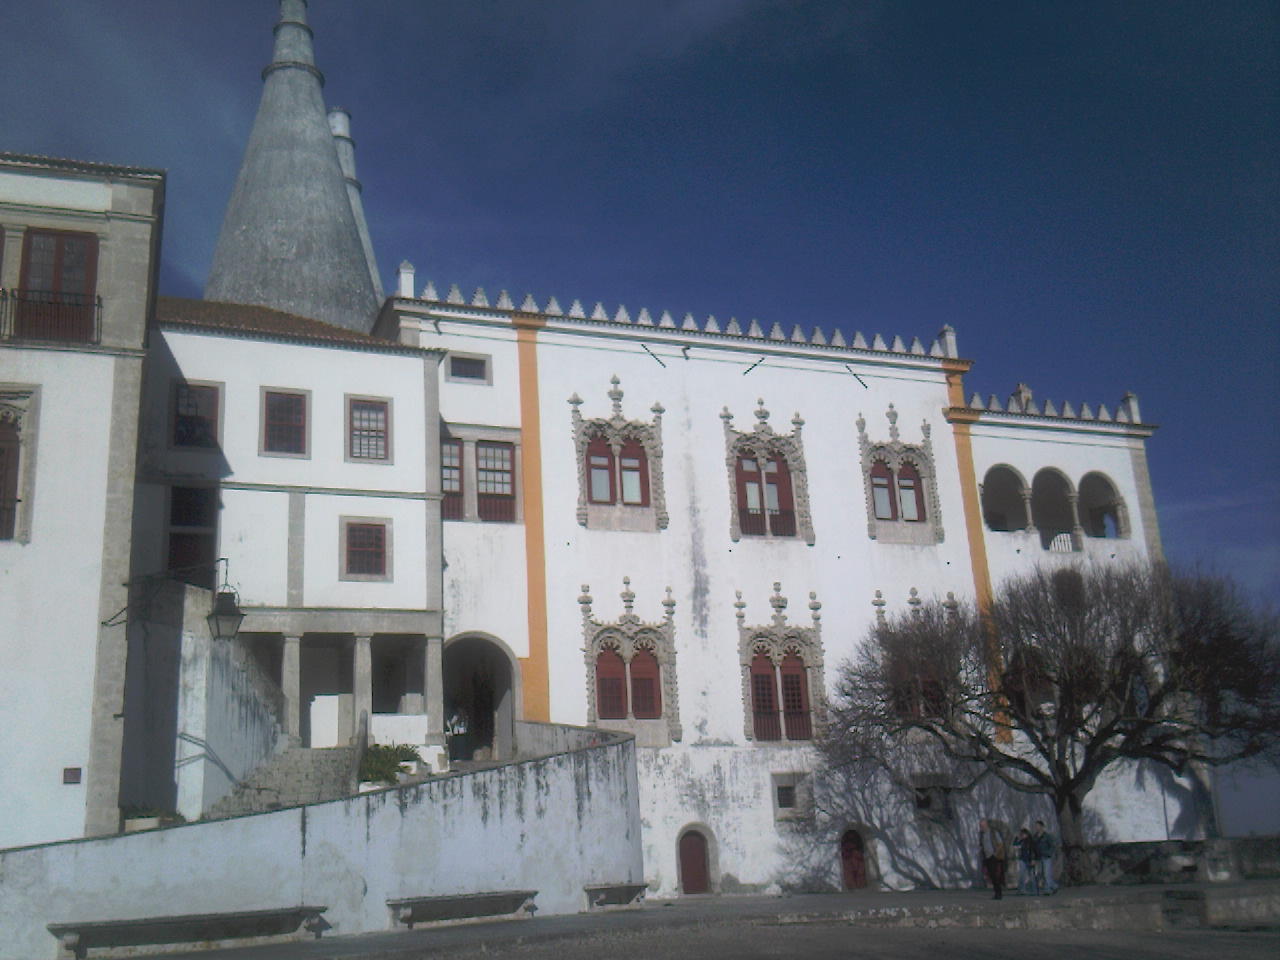 Royal Palace at Sintra near Lisbon, Portugal